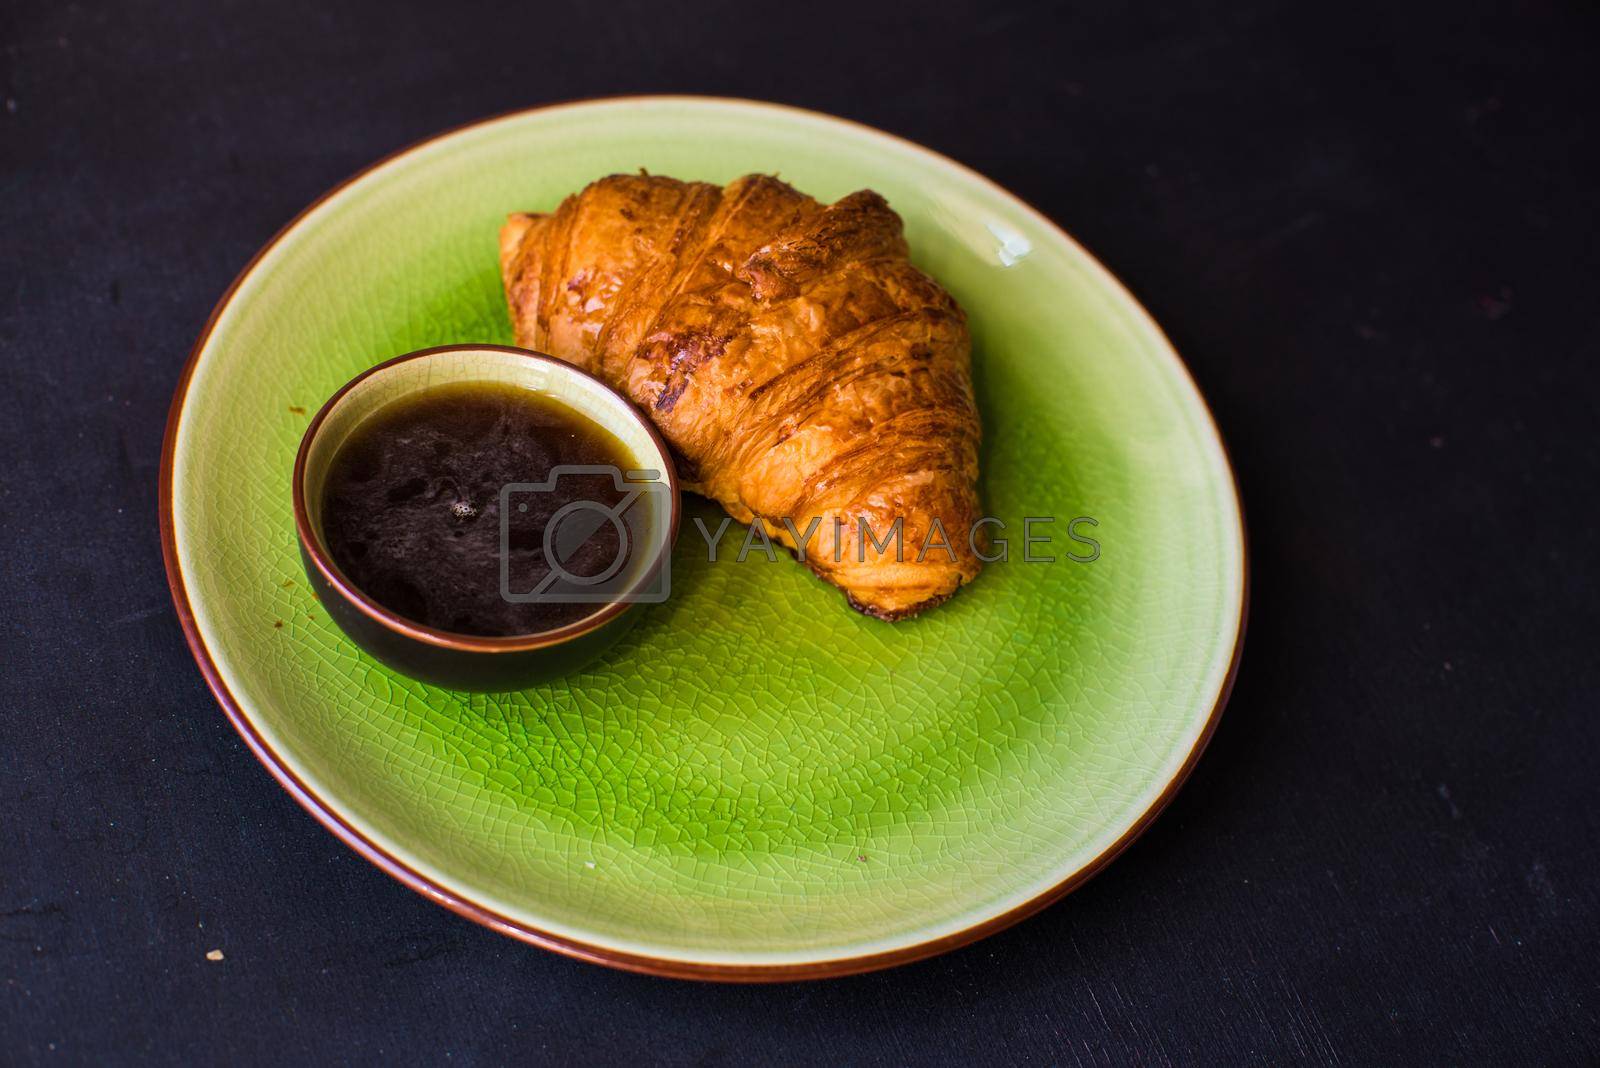 Fresh homemade french croissant on dark wooden table